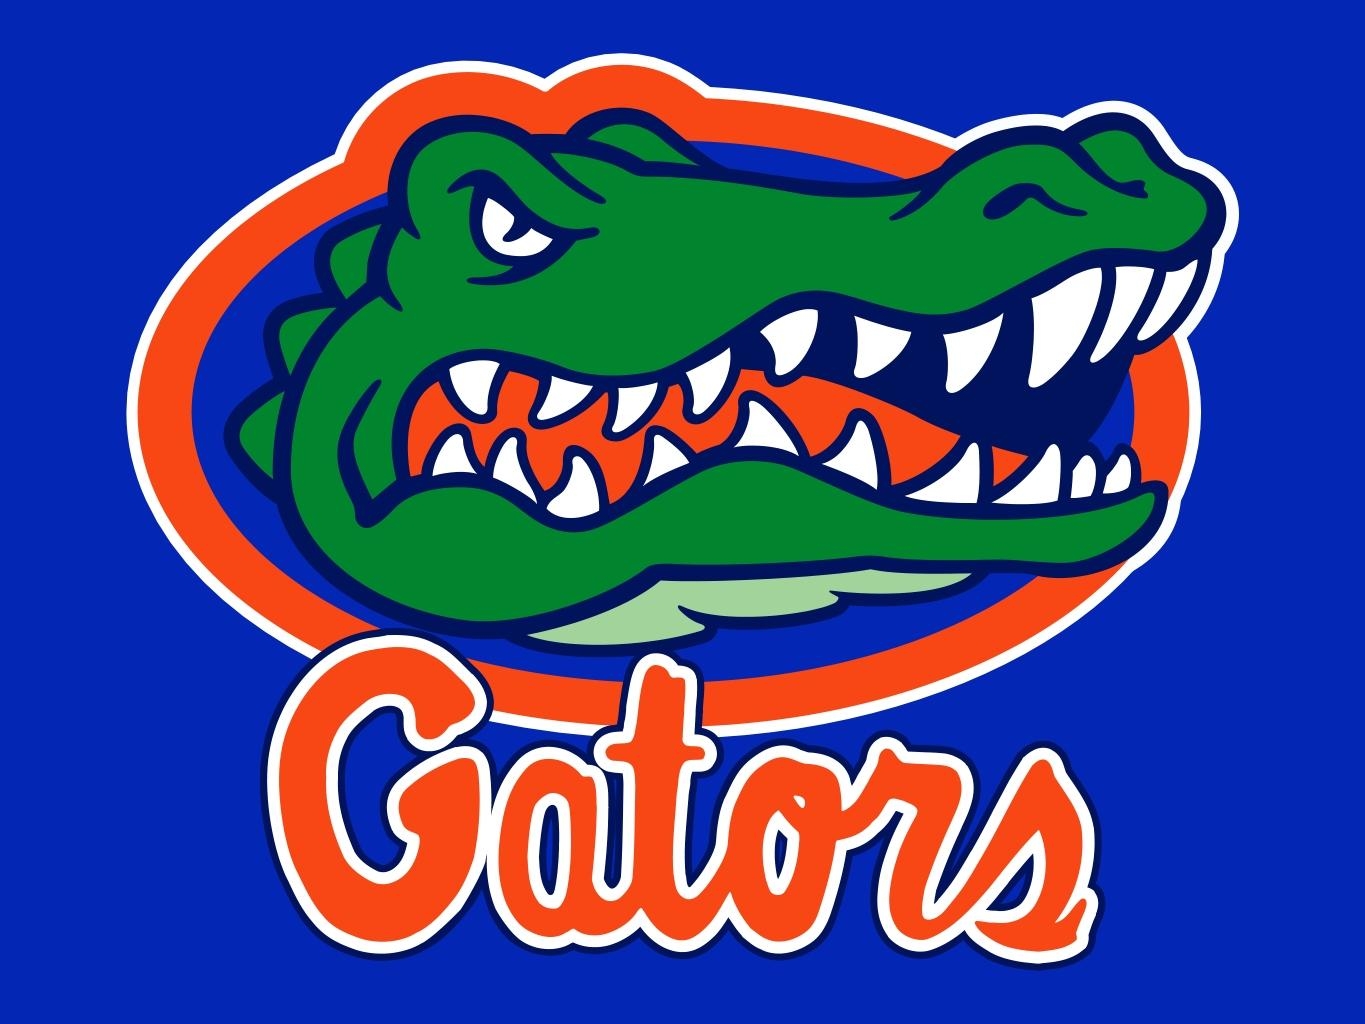 Clip Arts Related To : florida gators script logo. view all Gator Basketbal...